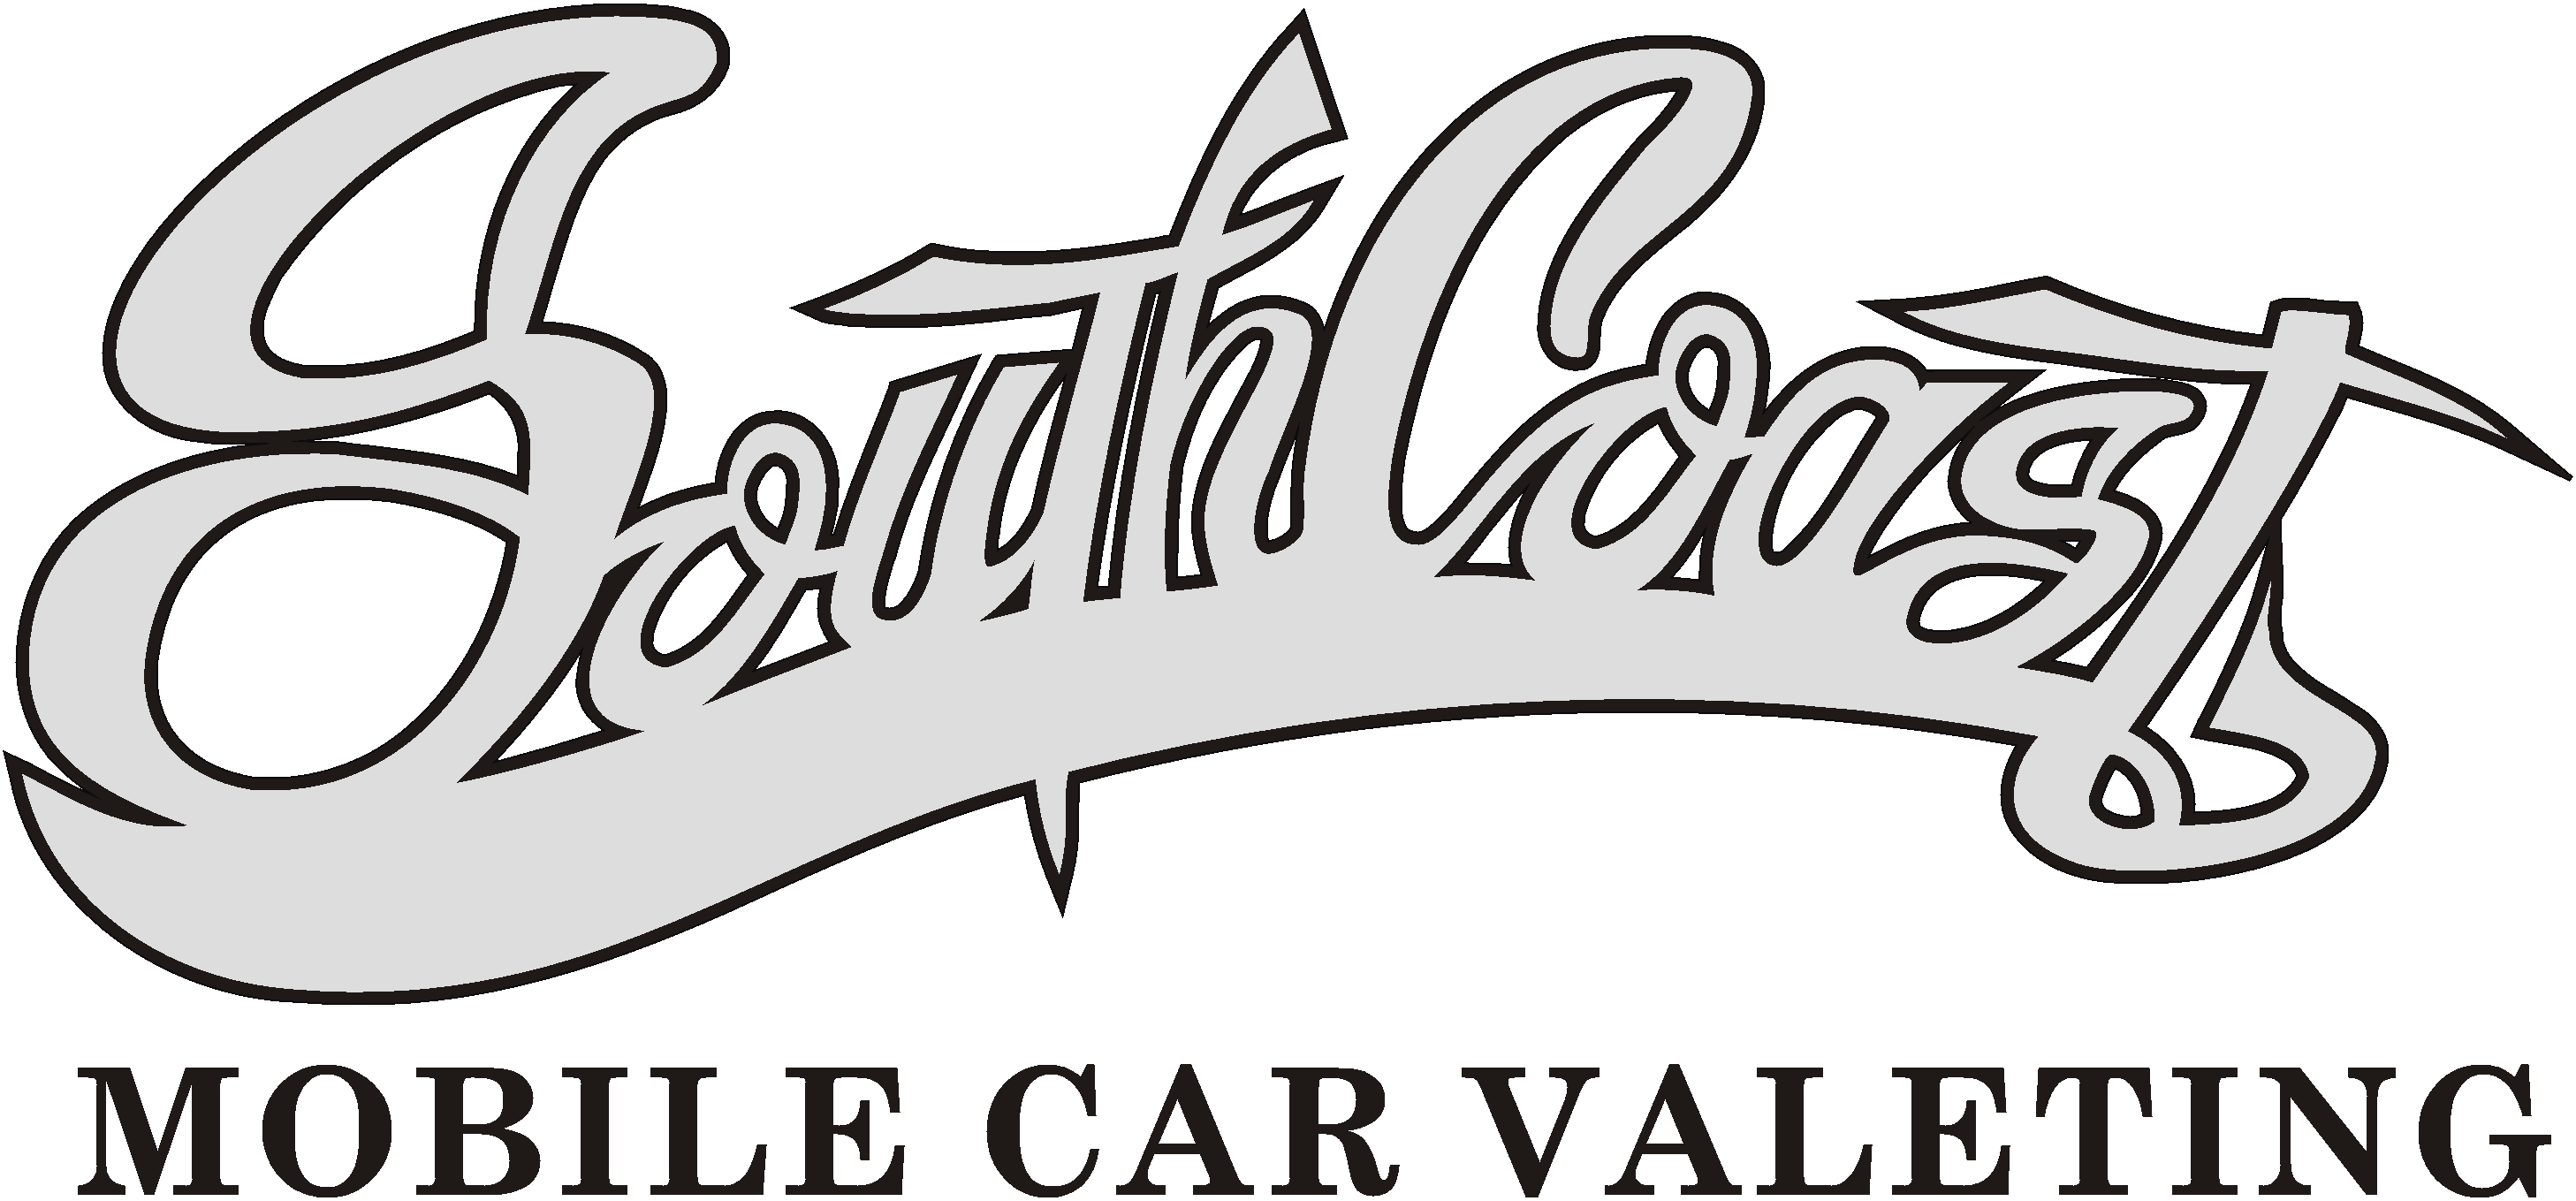 Southcoast Mobile Car Valeting